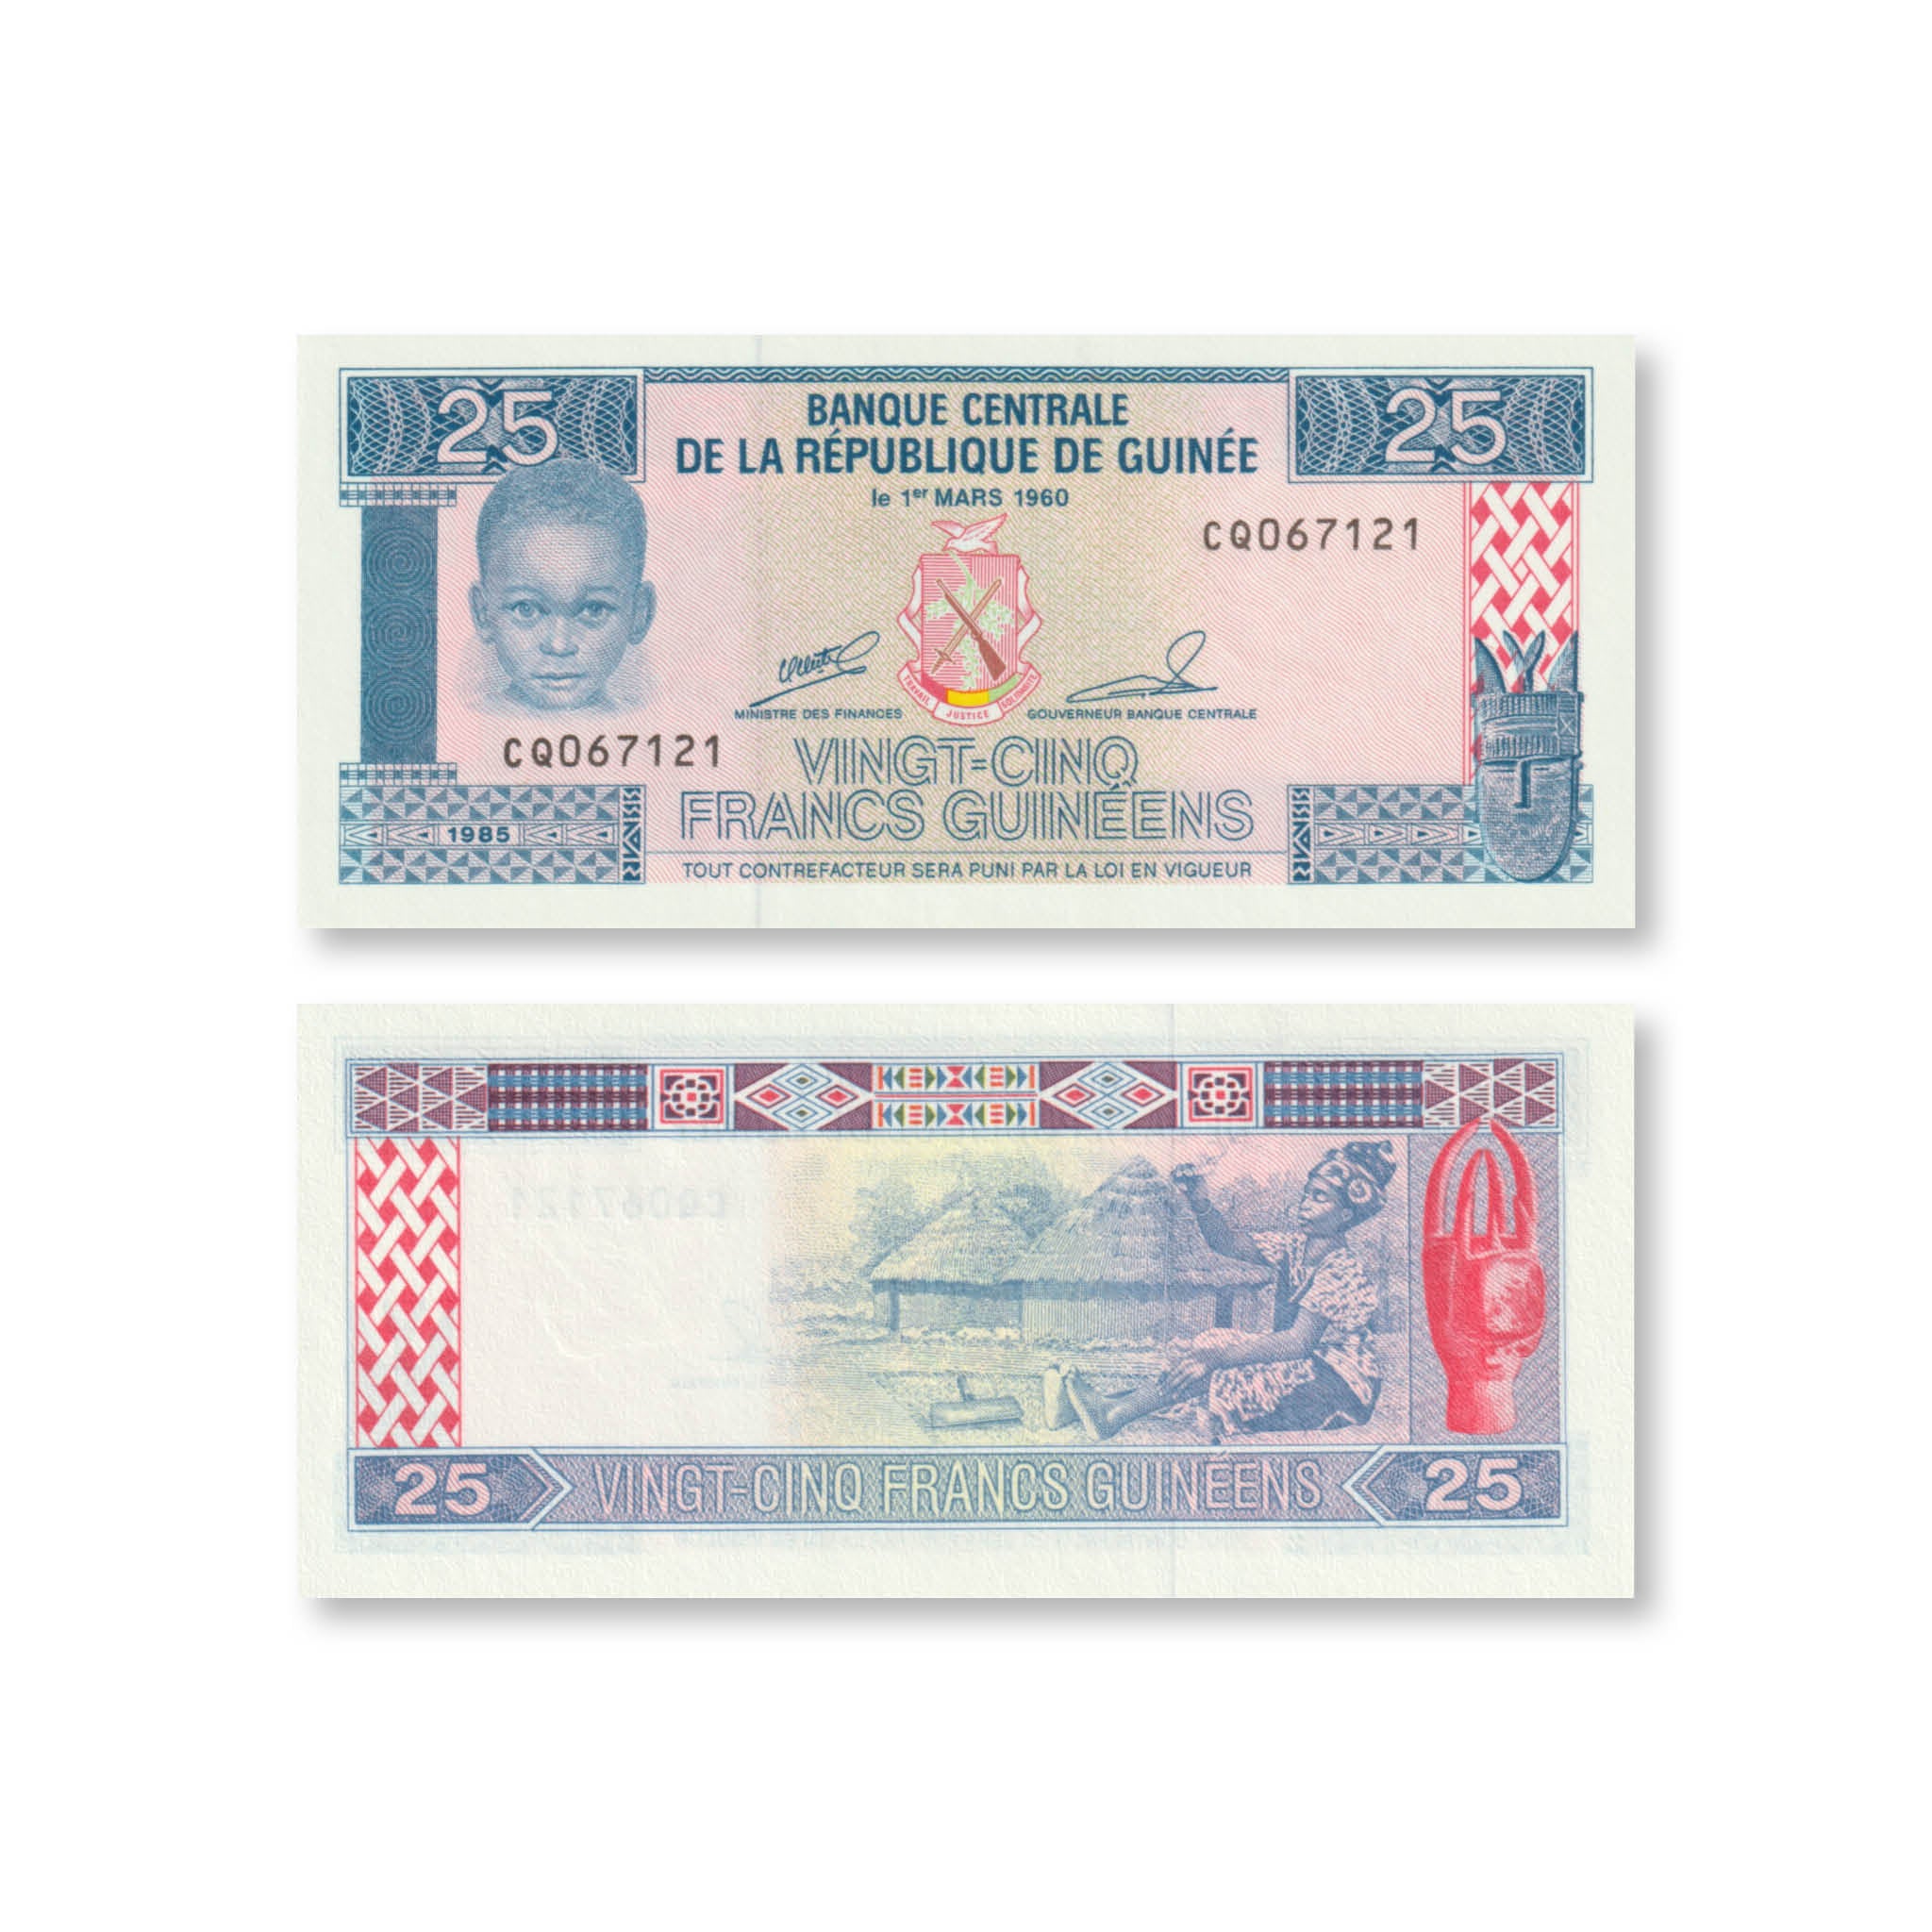 Guinea 25 Francs, 1985, B318a, P28a, UNC - Robert's World Money - World Banknotes